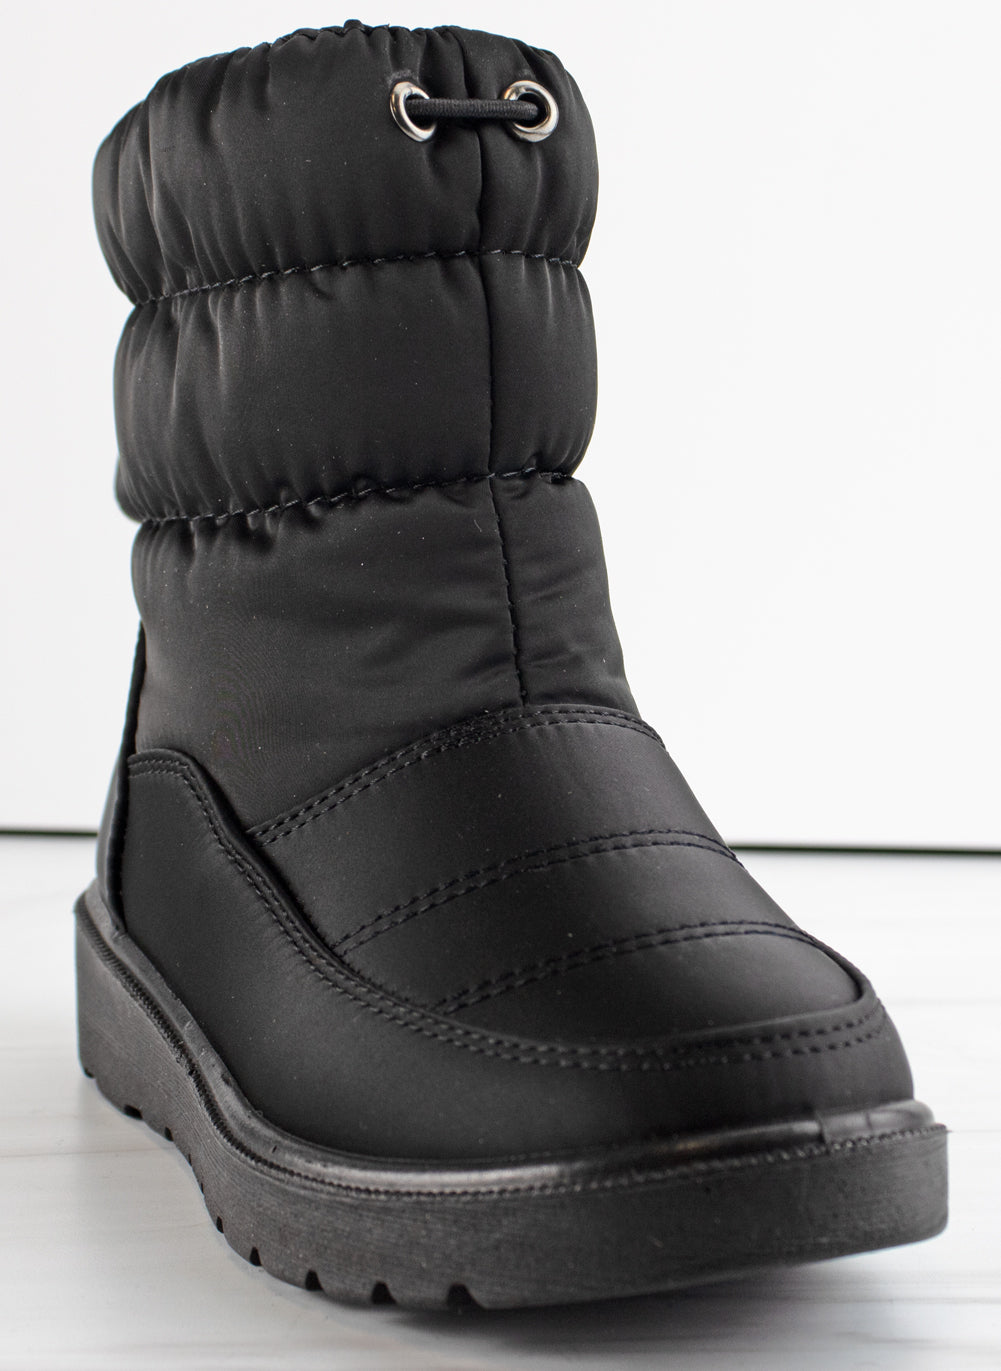 Coleen 1K Little Girls Insulated Fur Lined Rain/Snow Boots